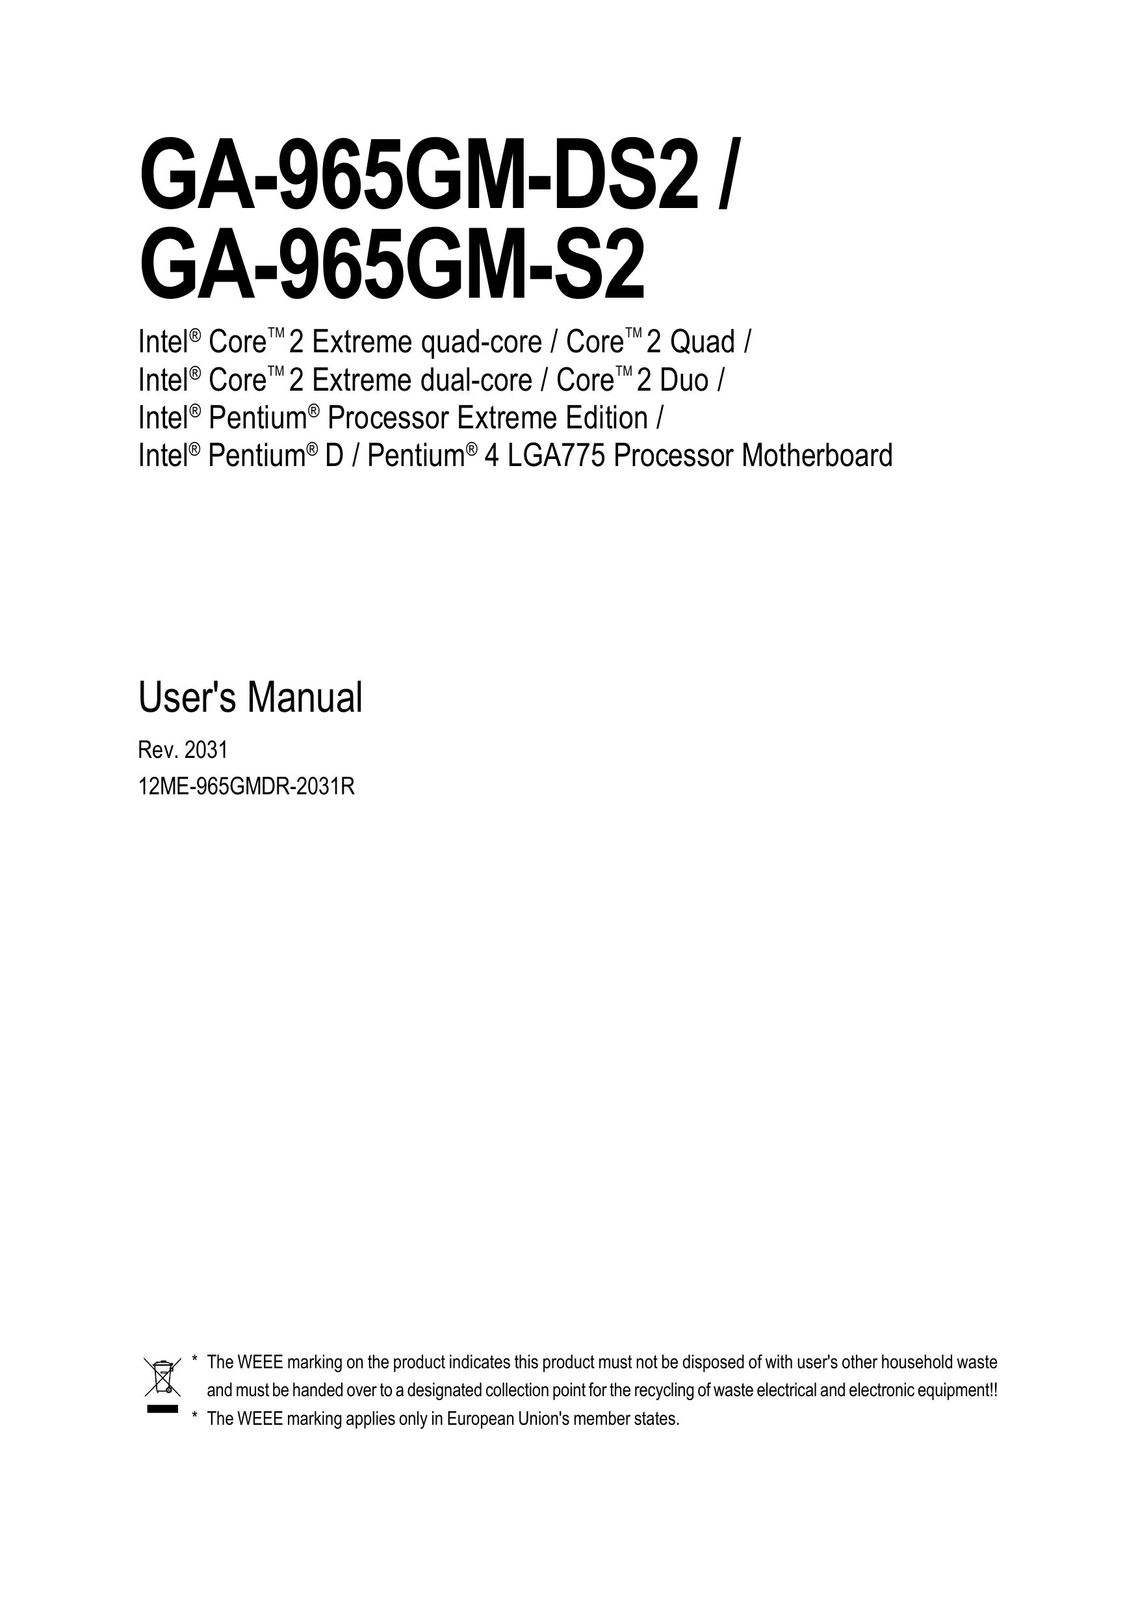 Gigabyte GA-965GM-S2 Computer Hardware User Manual